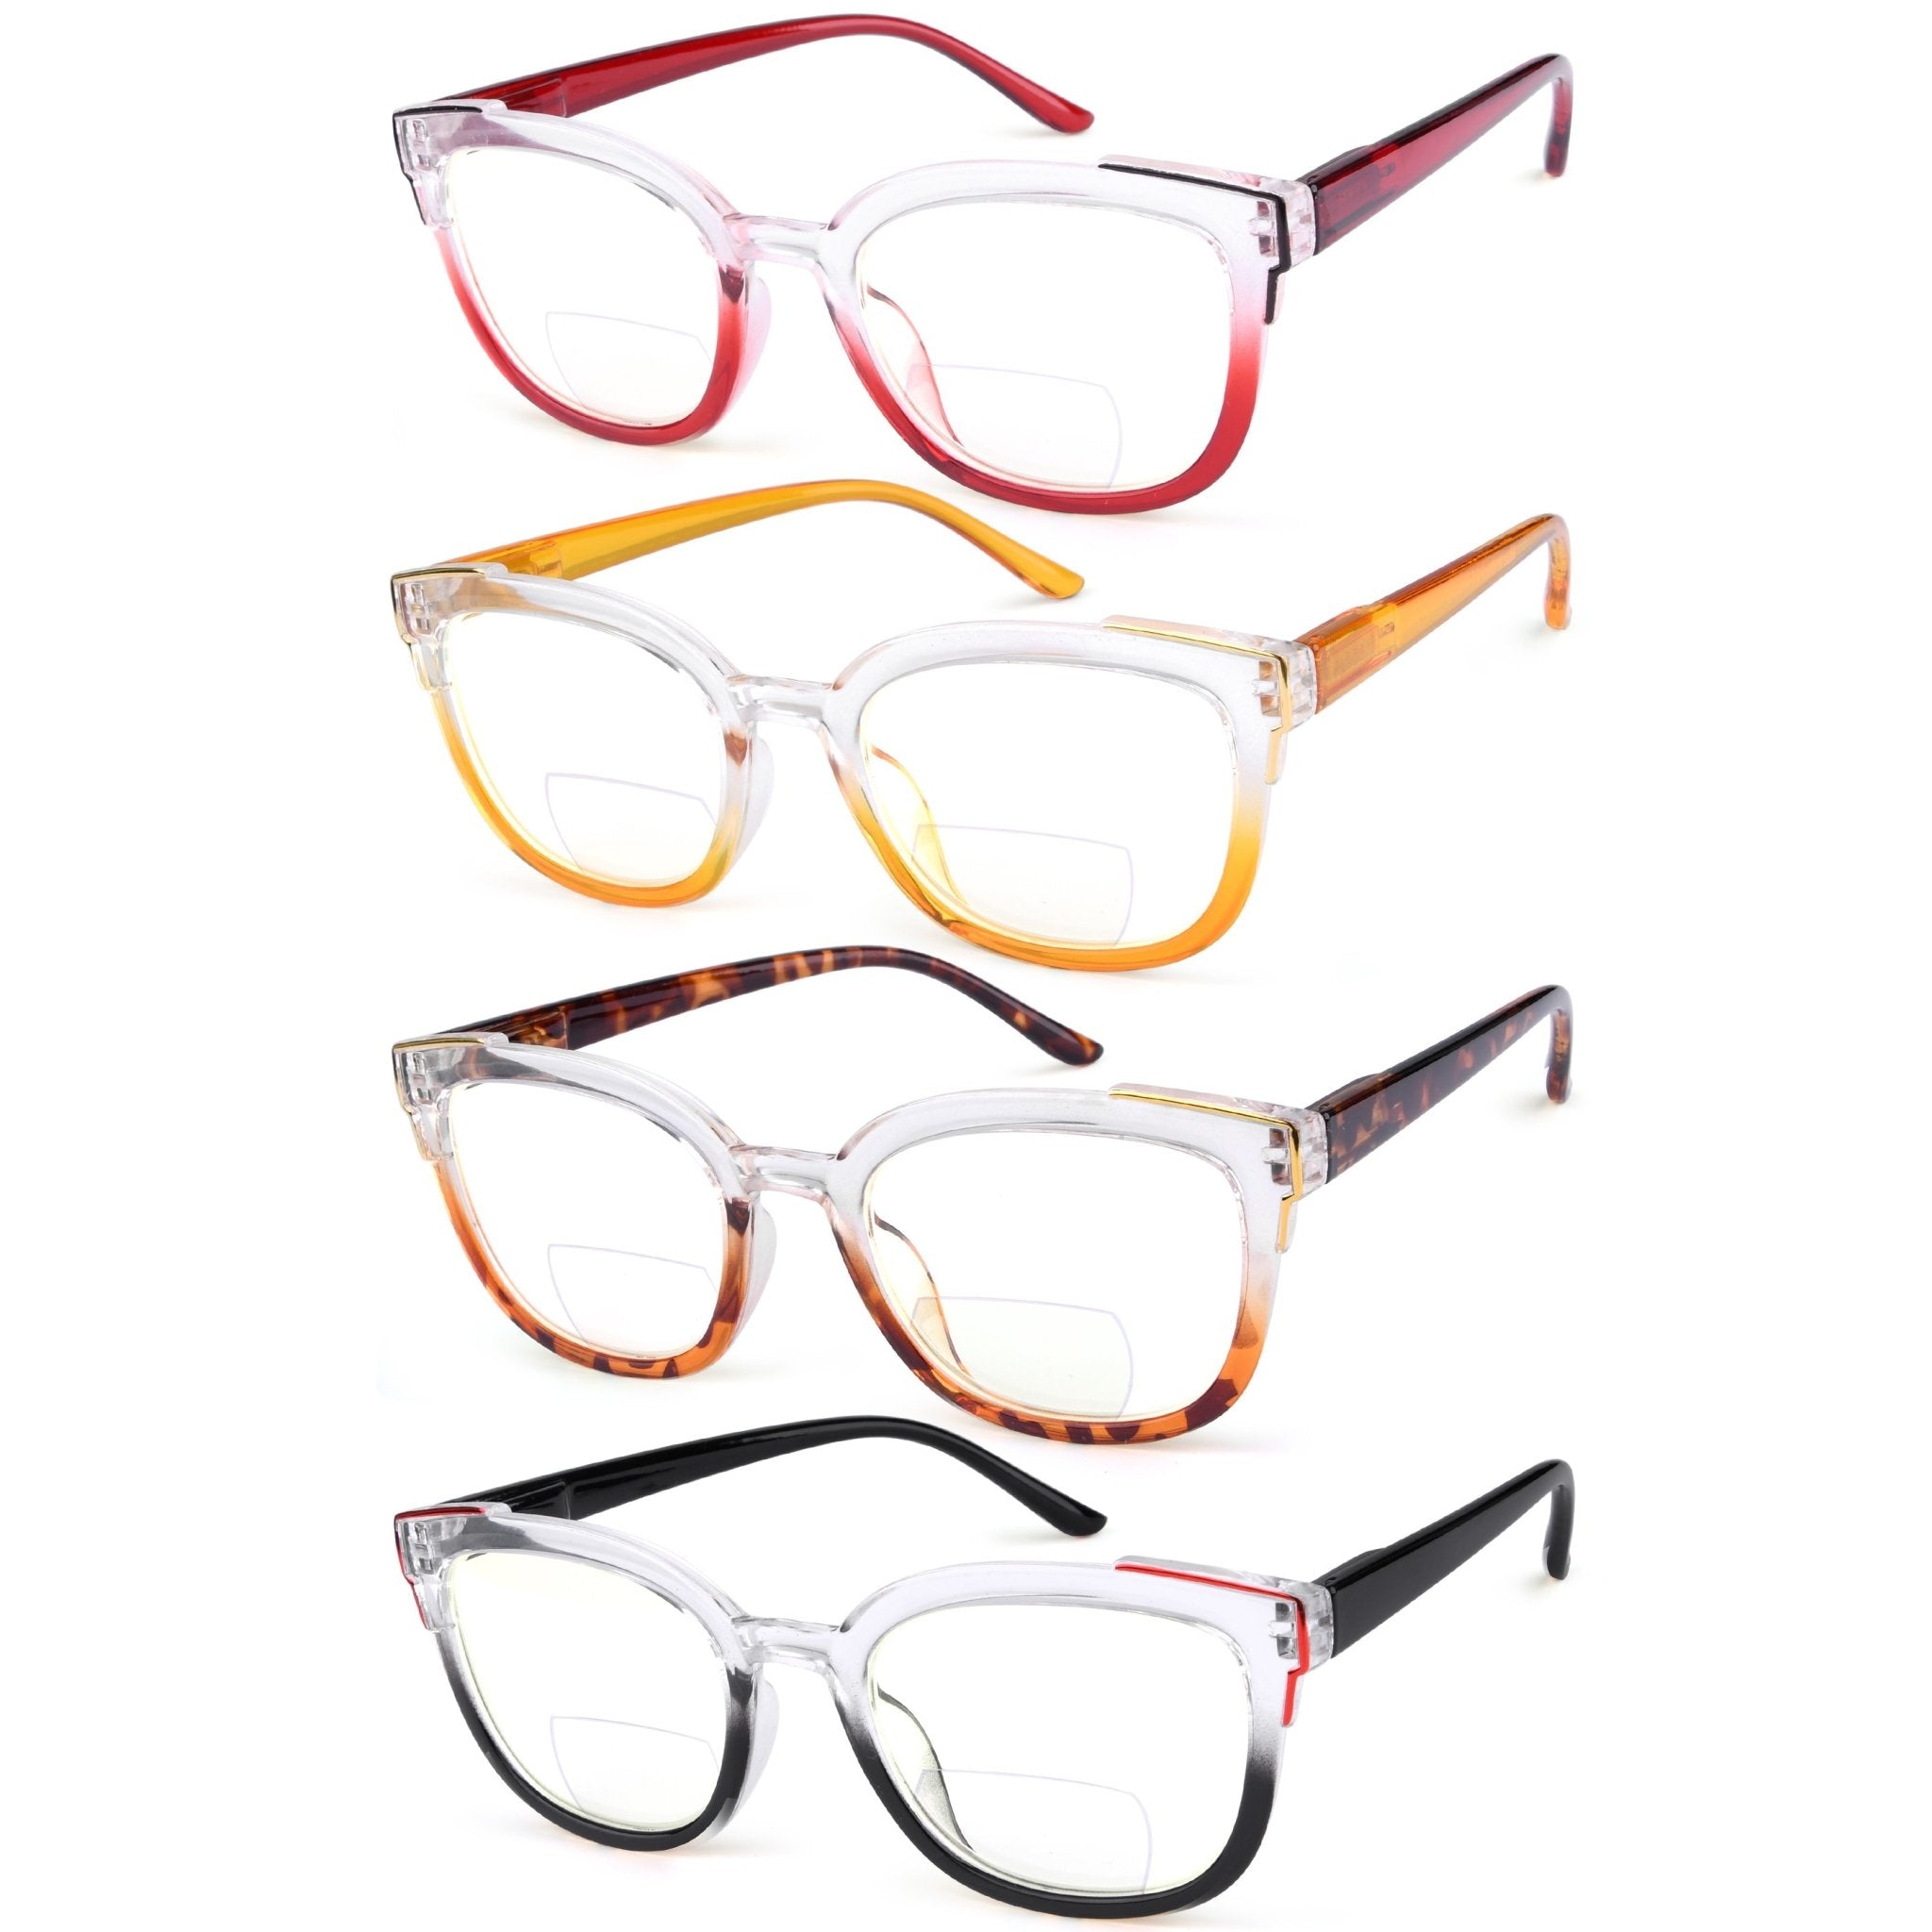 Women's Bifocal Reading Glasses | Sunglasses